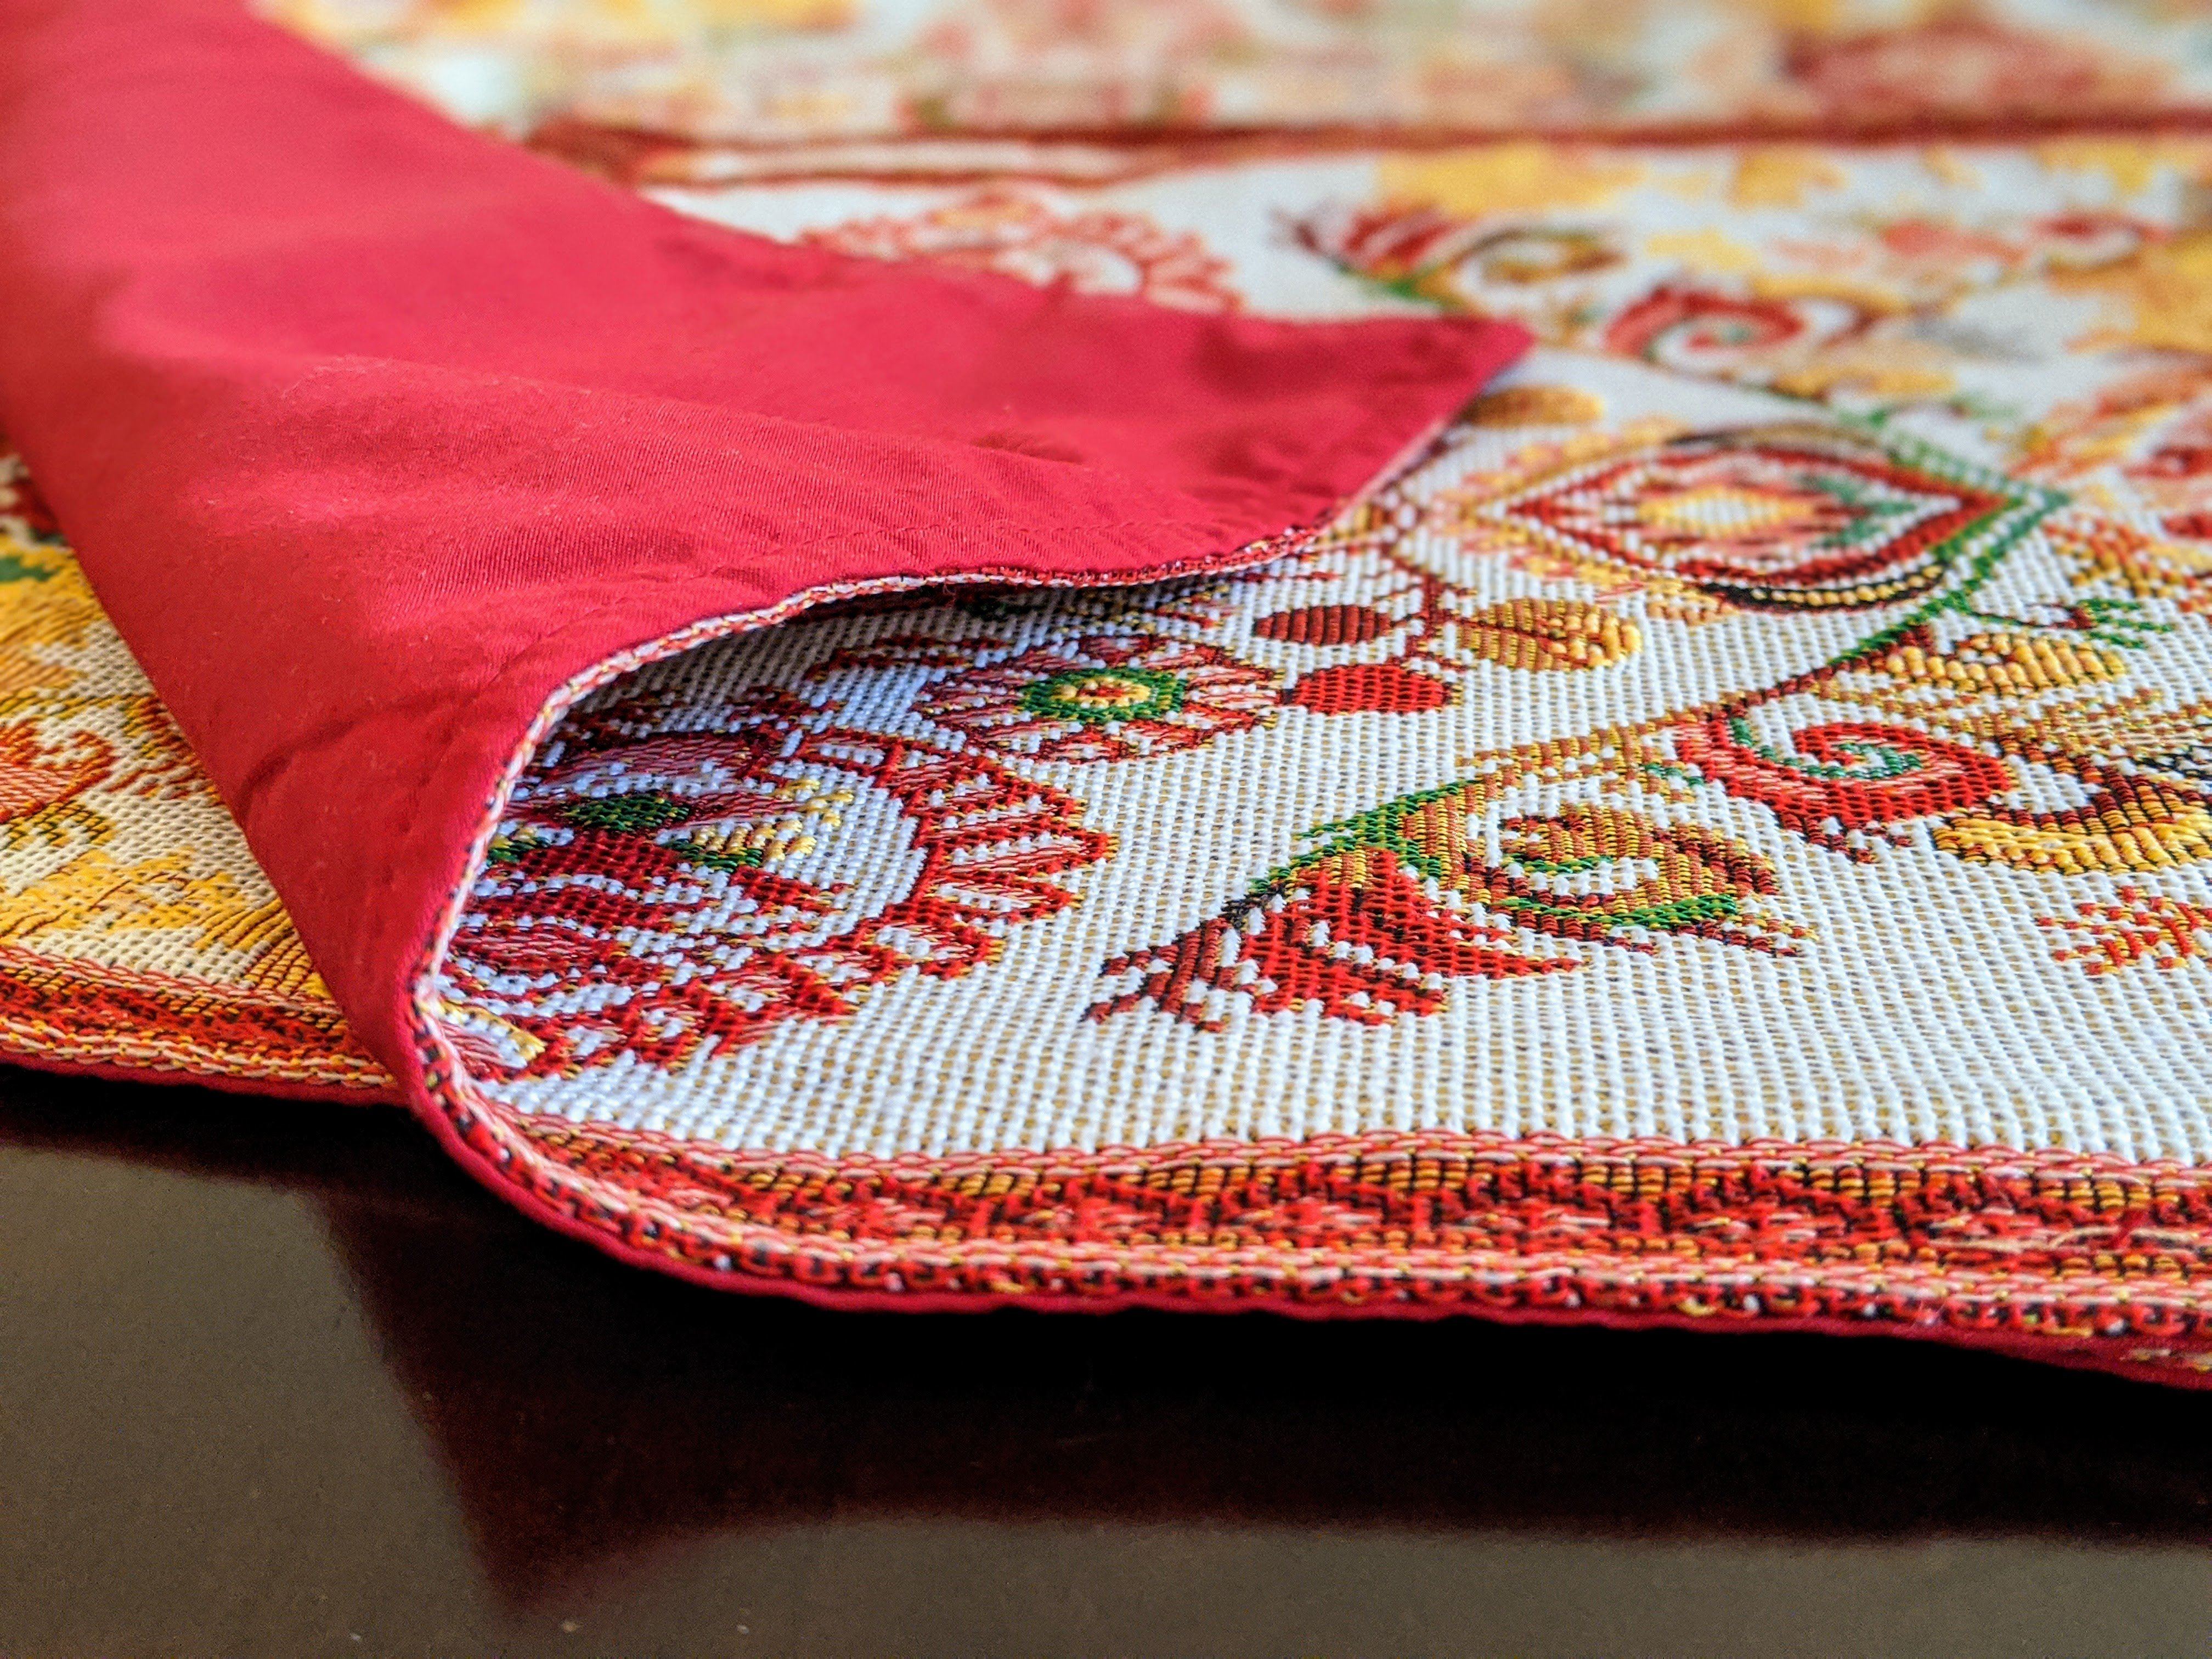 Tache Elegant Burgundy Ornate Paisley Woven Tapestry Table Runner (18194) - Tache Home Fashion